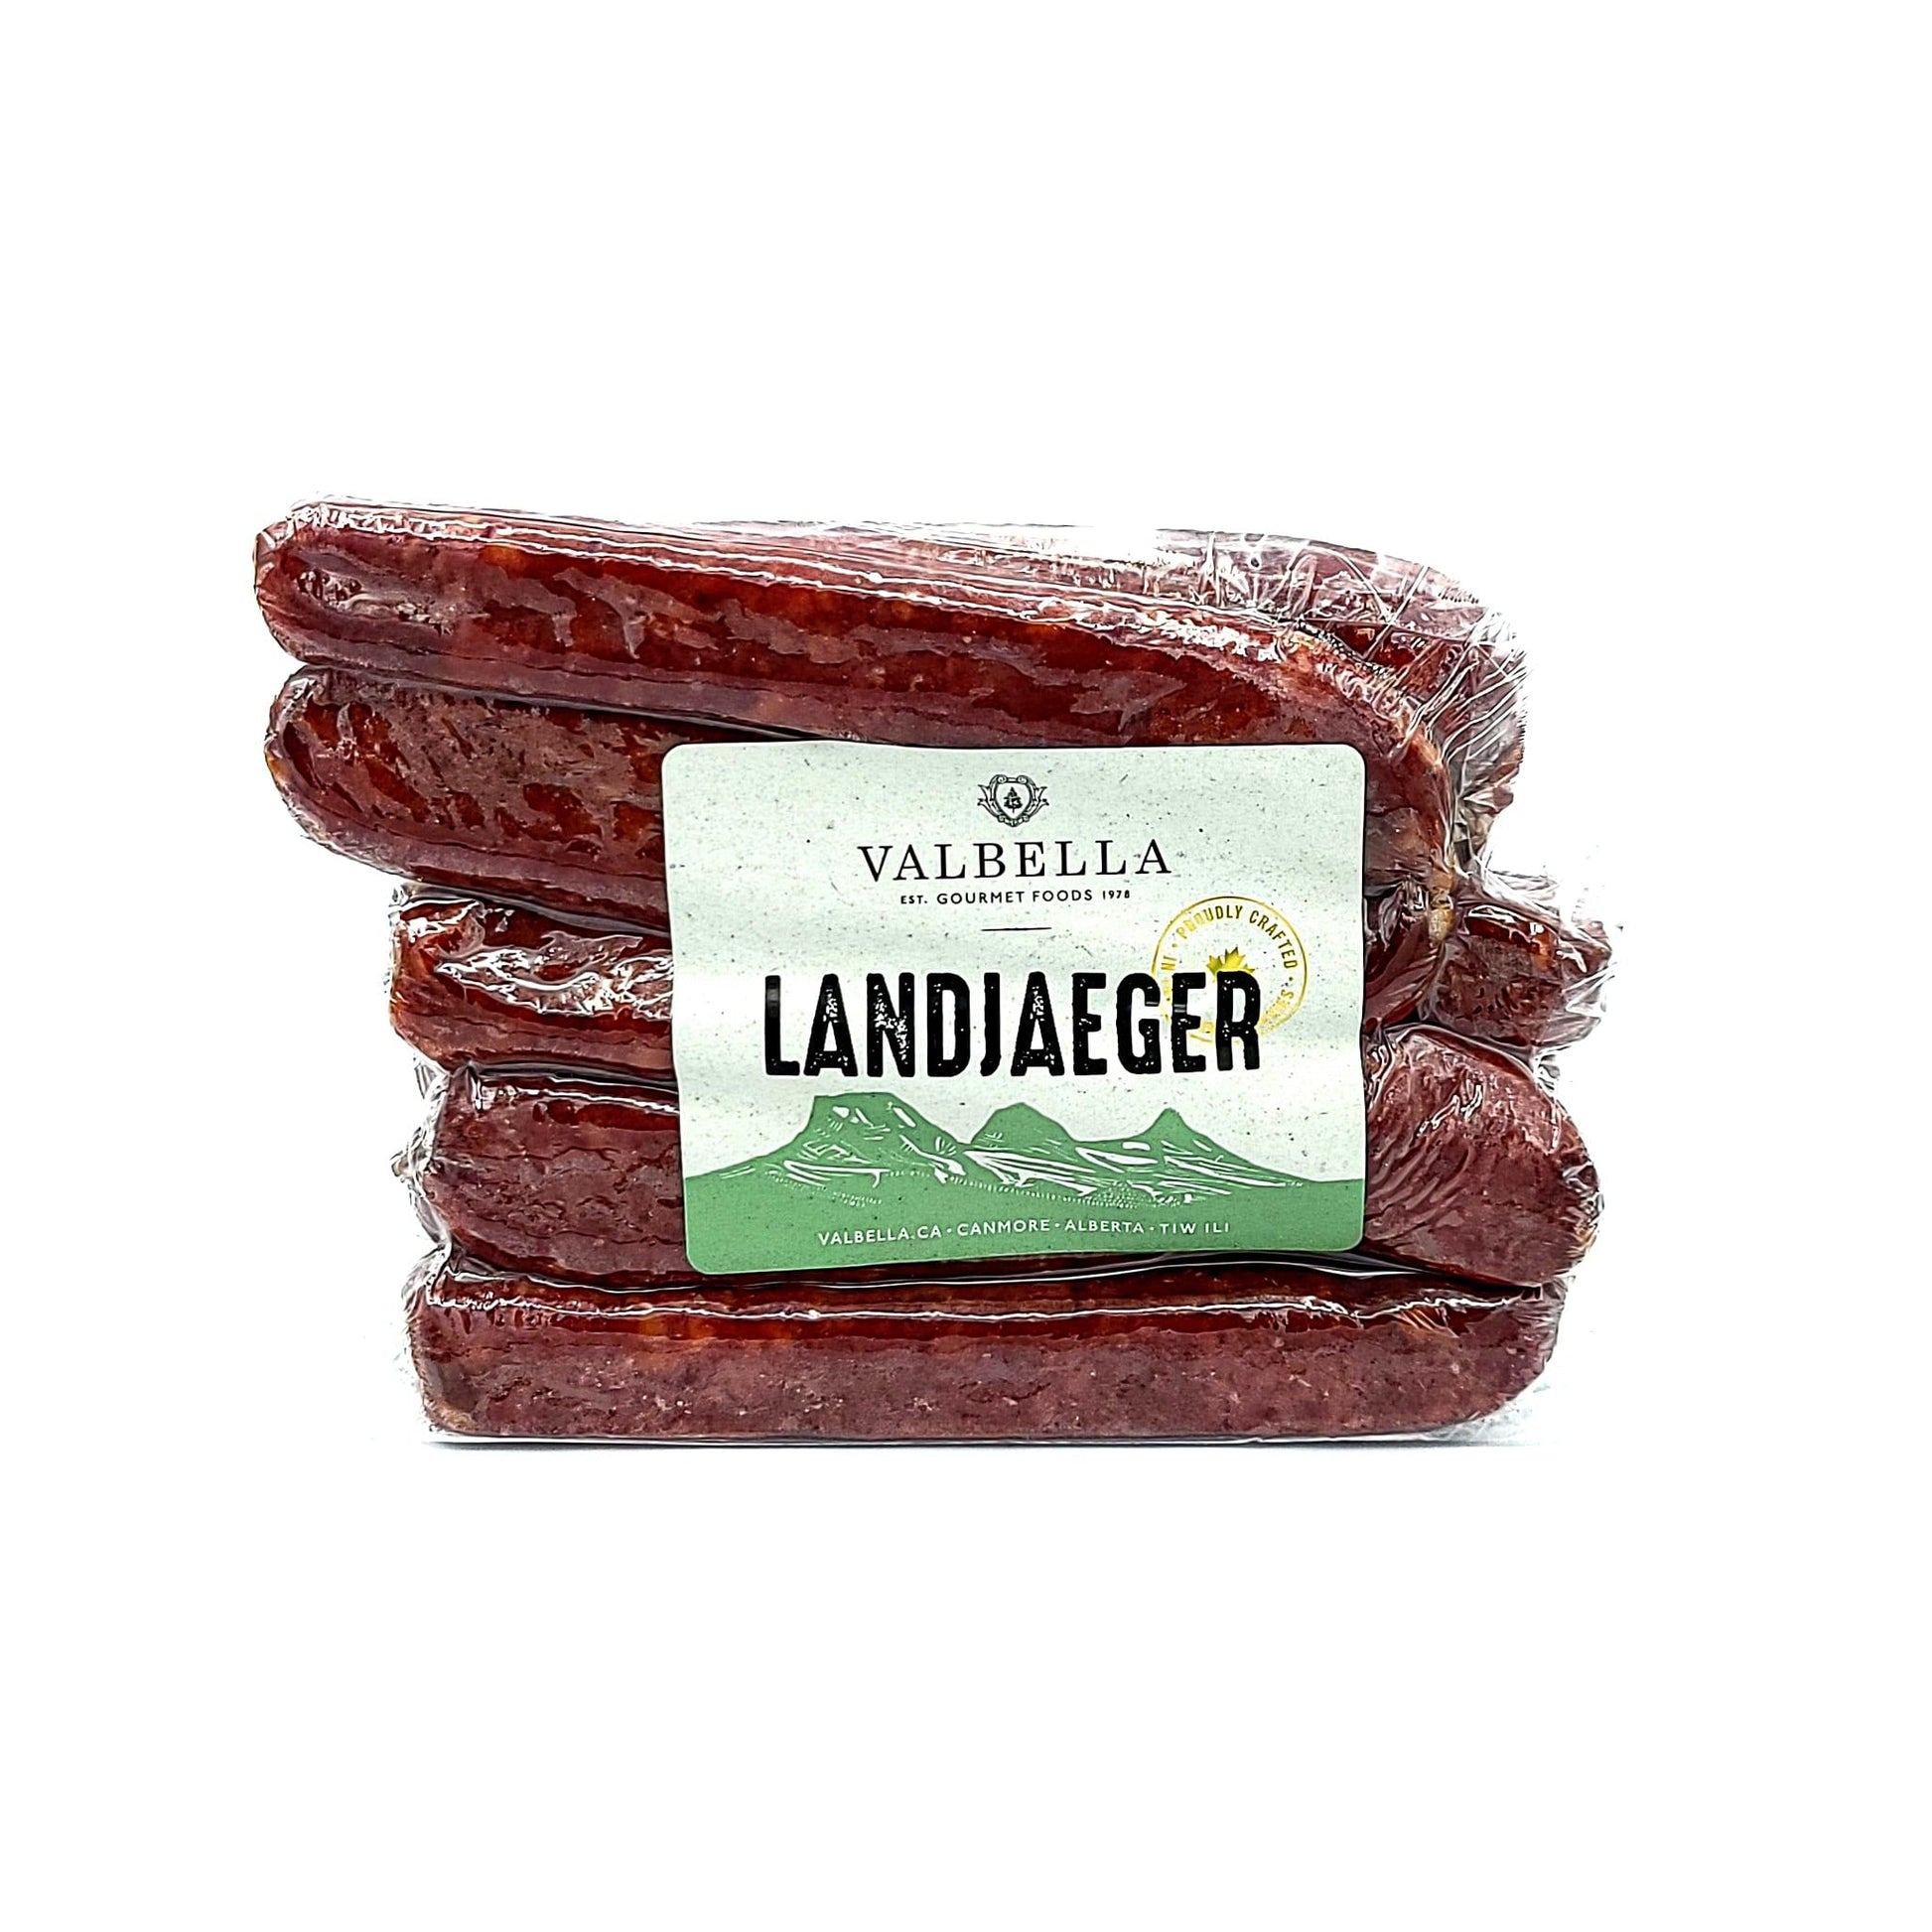 Landjäger - Pack of 10 - Valbella Gourmet Foods